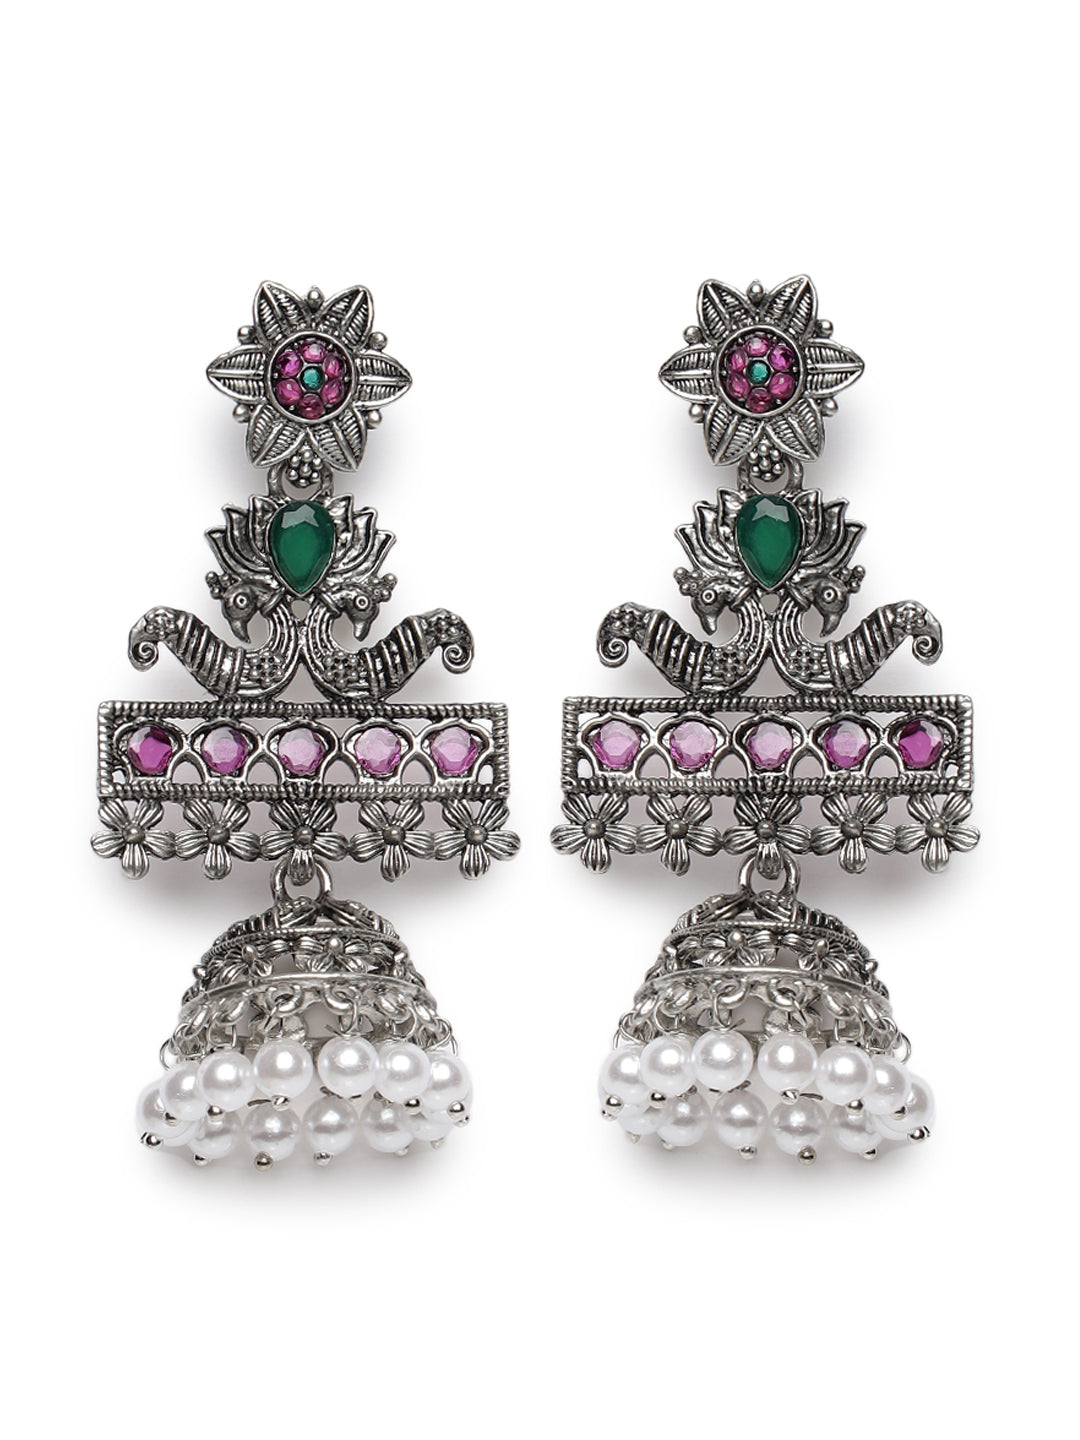 Designer Jaipur's Handmade Mantra Jhumka German Silver Oxidised Stud  Earrings For Women